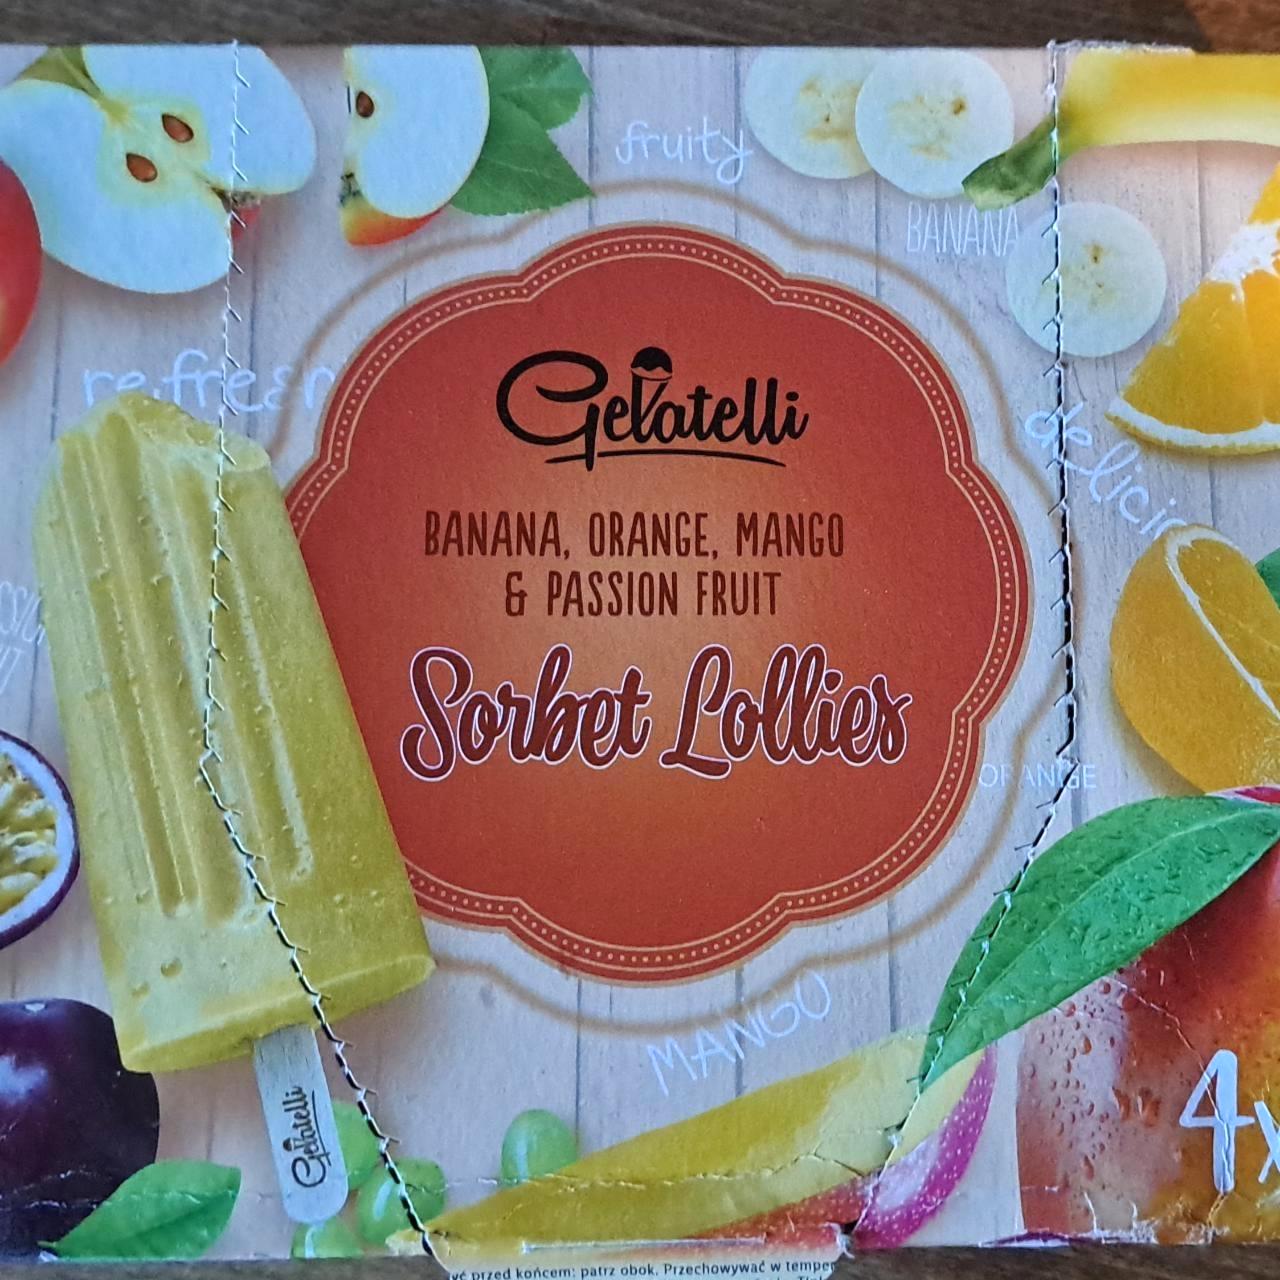 Képek - Sorbet lollies Banana, orange, mango & passion fruit Gelatelli